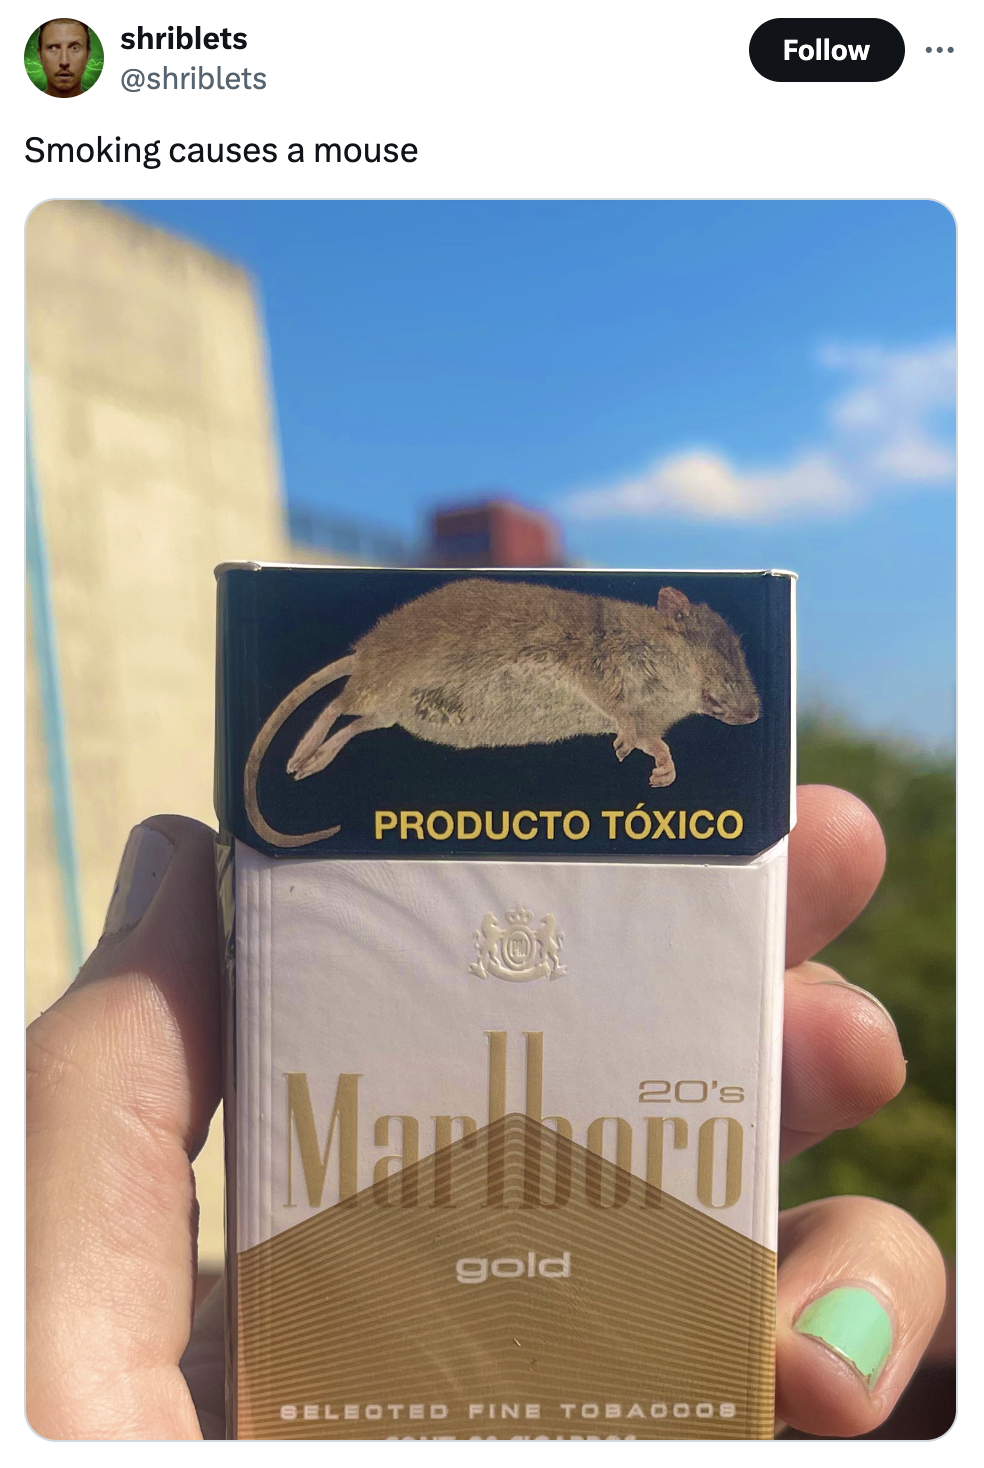 dugong - shriblets Smoking causes a mouse Producto Txico 20's Marlboro gold Selected Fine Tobadoor